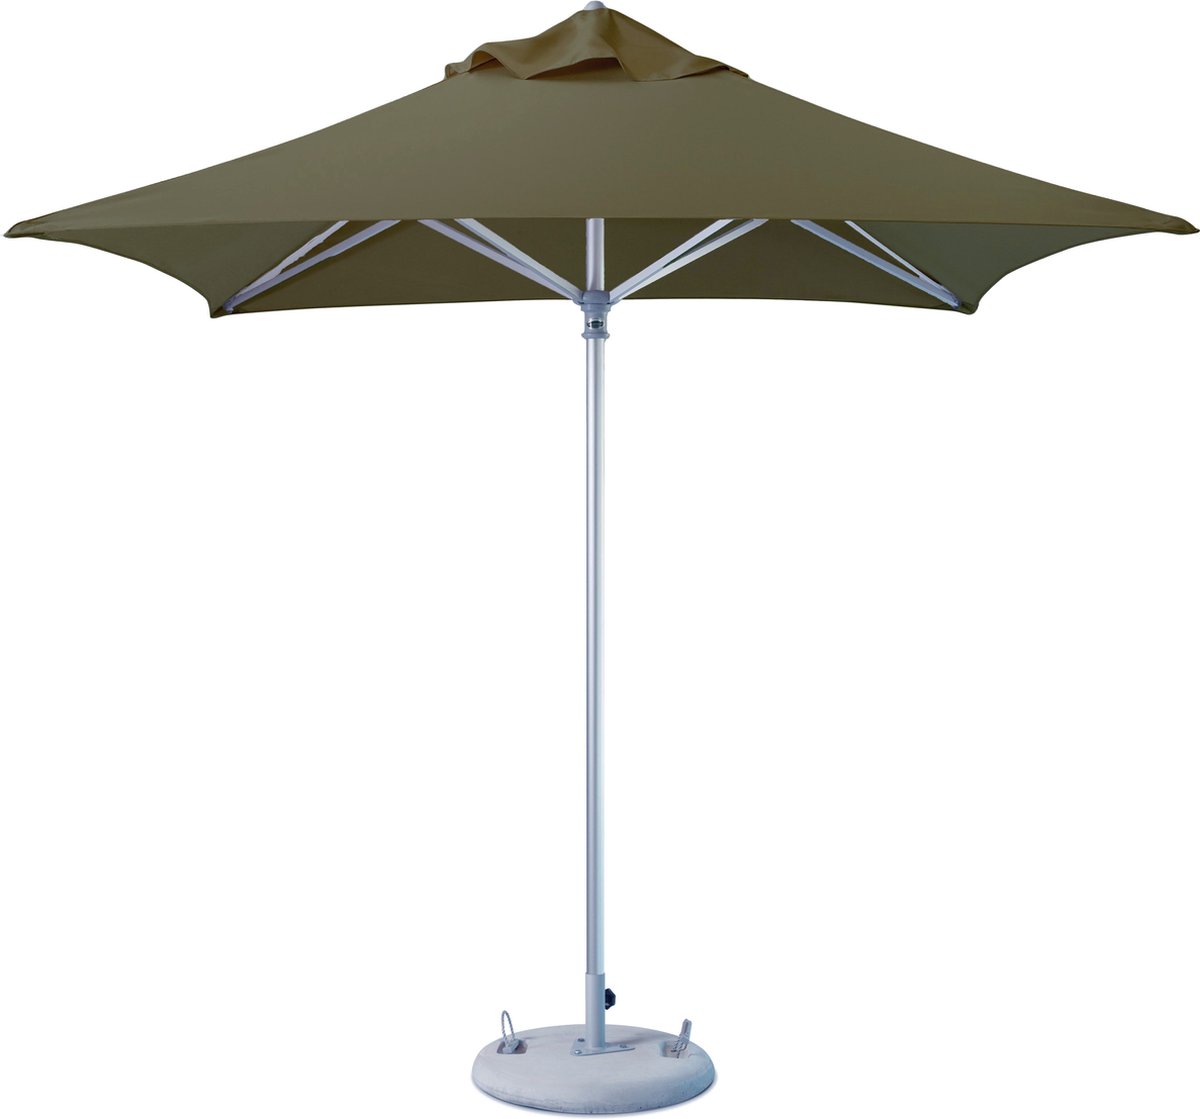 Cape Umbrellas Automatische Parasol 250x250cm Olive